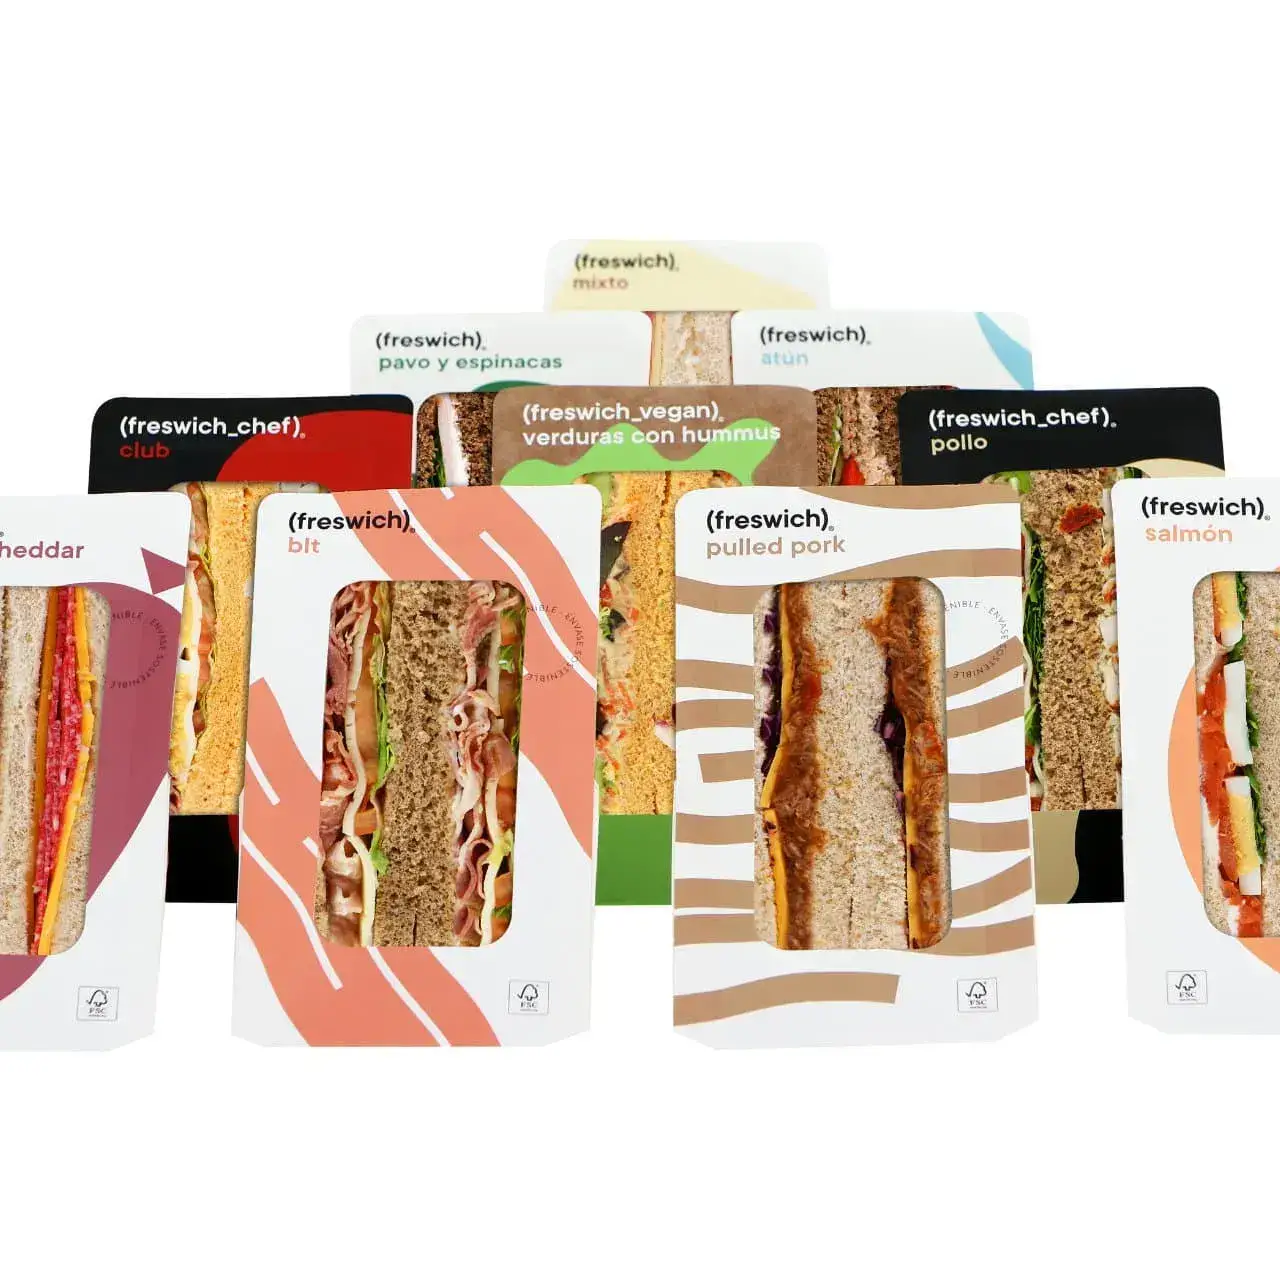 sandwiches lineas producto gfunion uai